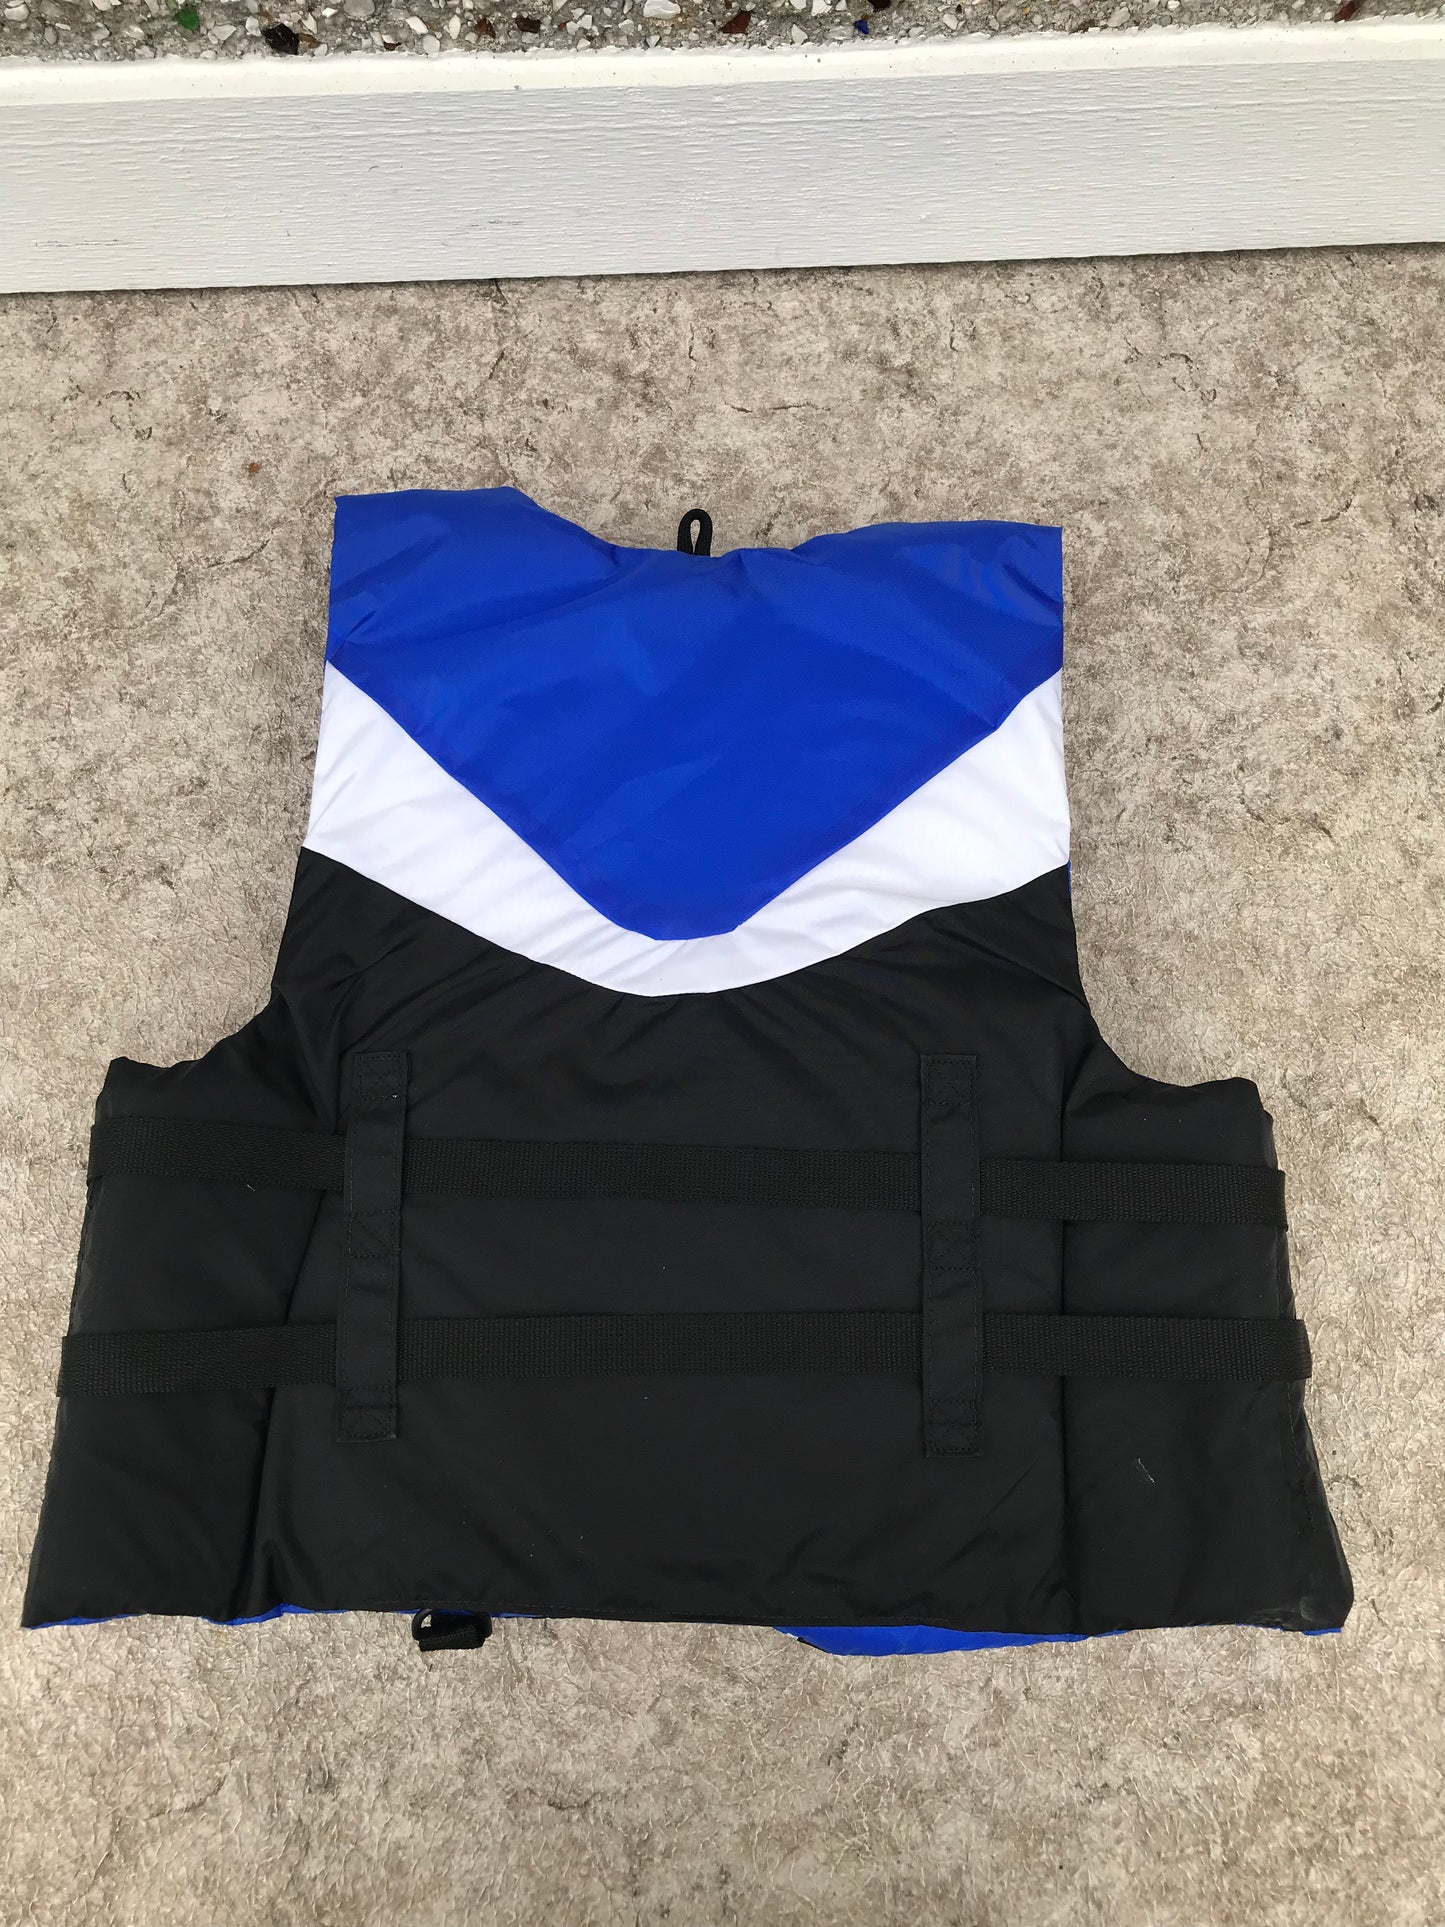 Life Jacket Adult Size X Large Fluid Black Blue As New